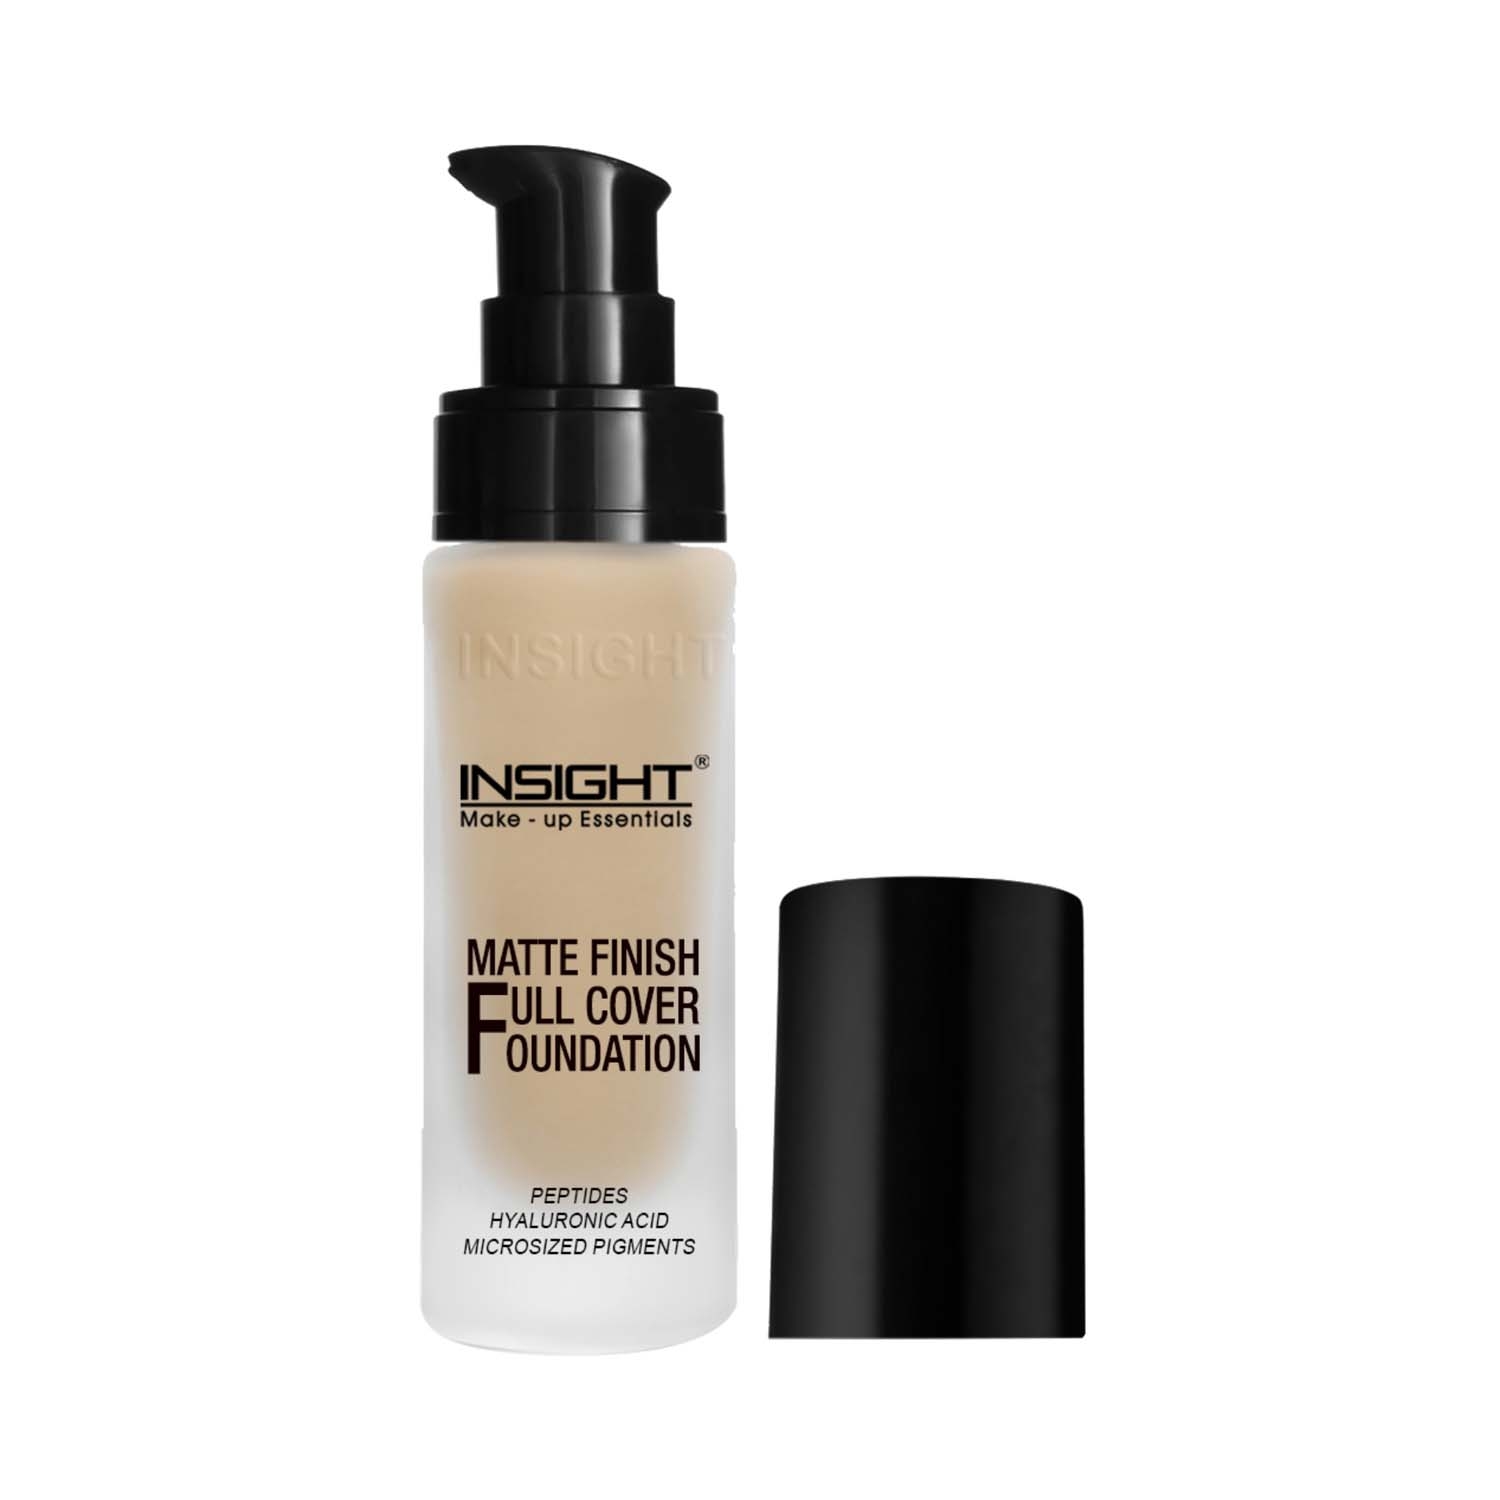 Insight Cosmetics | Insight Cosmetics Matte Finish Full Cover Foundation - LN13 (30ml)